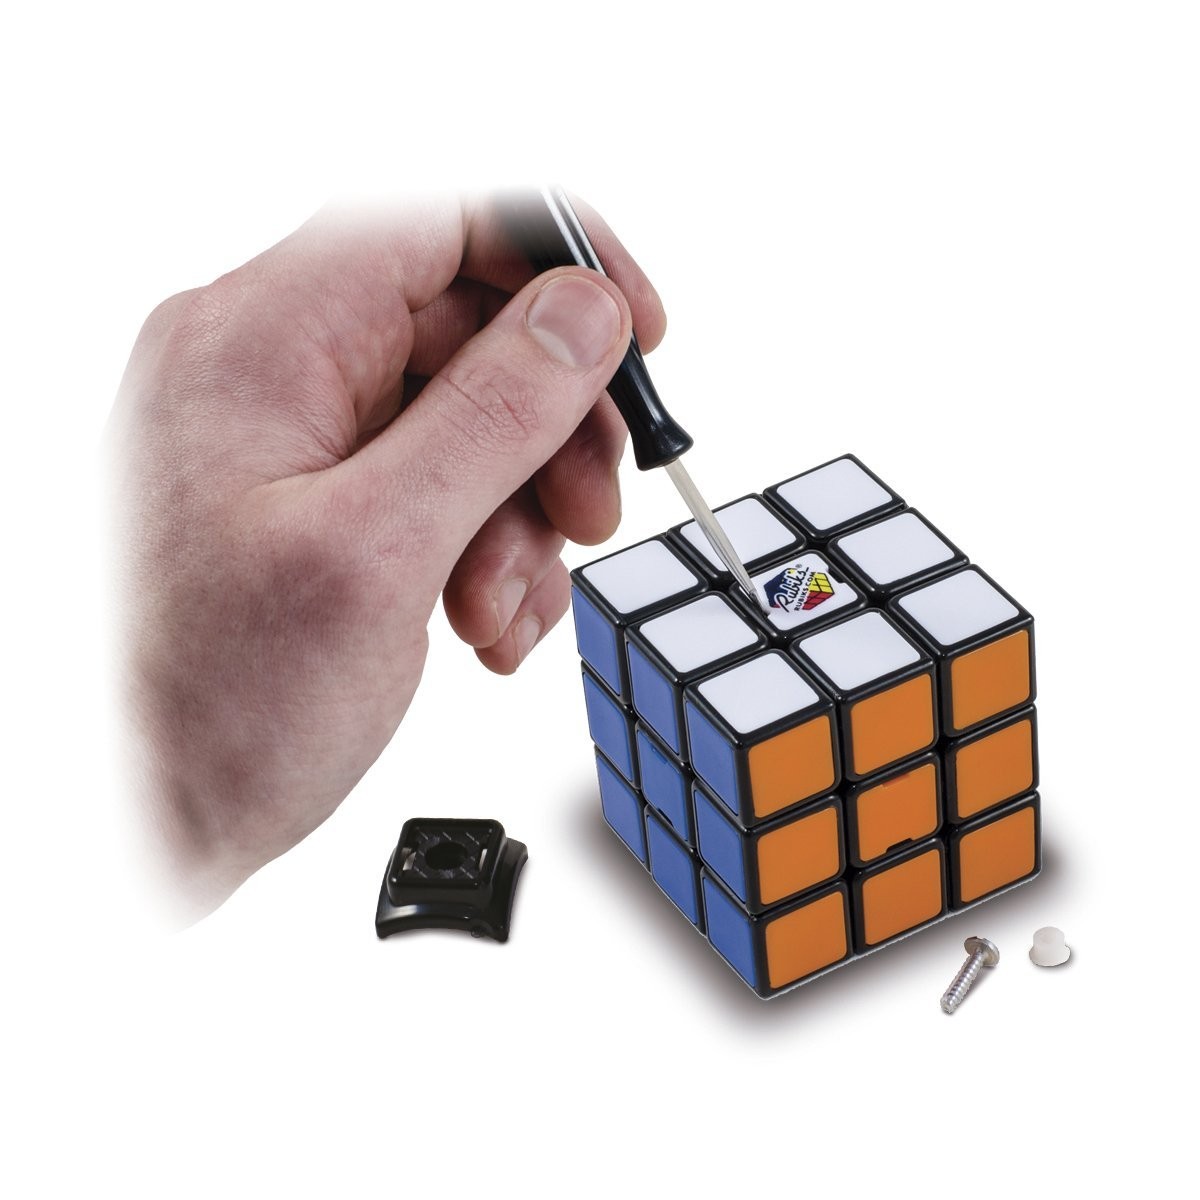 rubix cube or rubik's cube